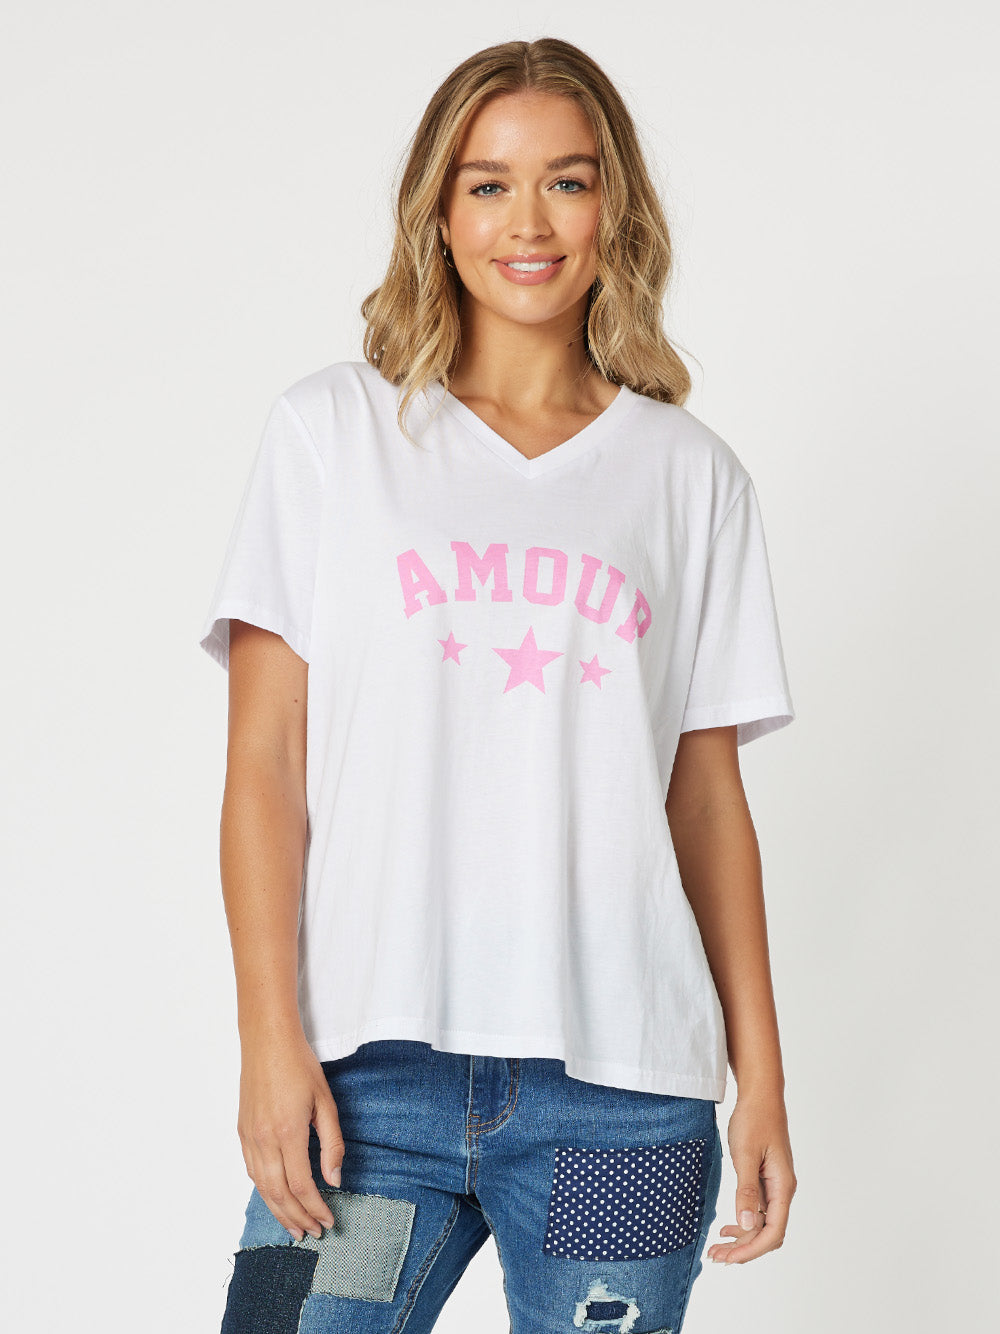 Amour Cotton T-Shirt - Pink